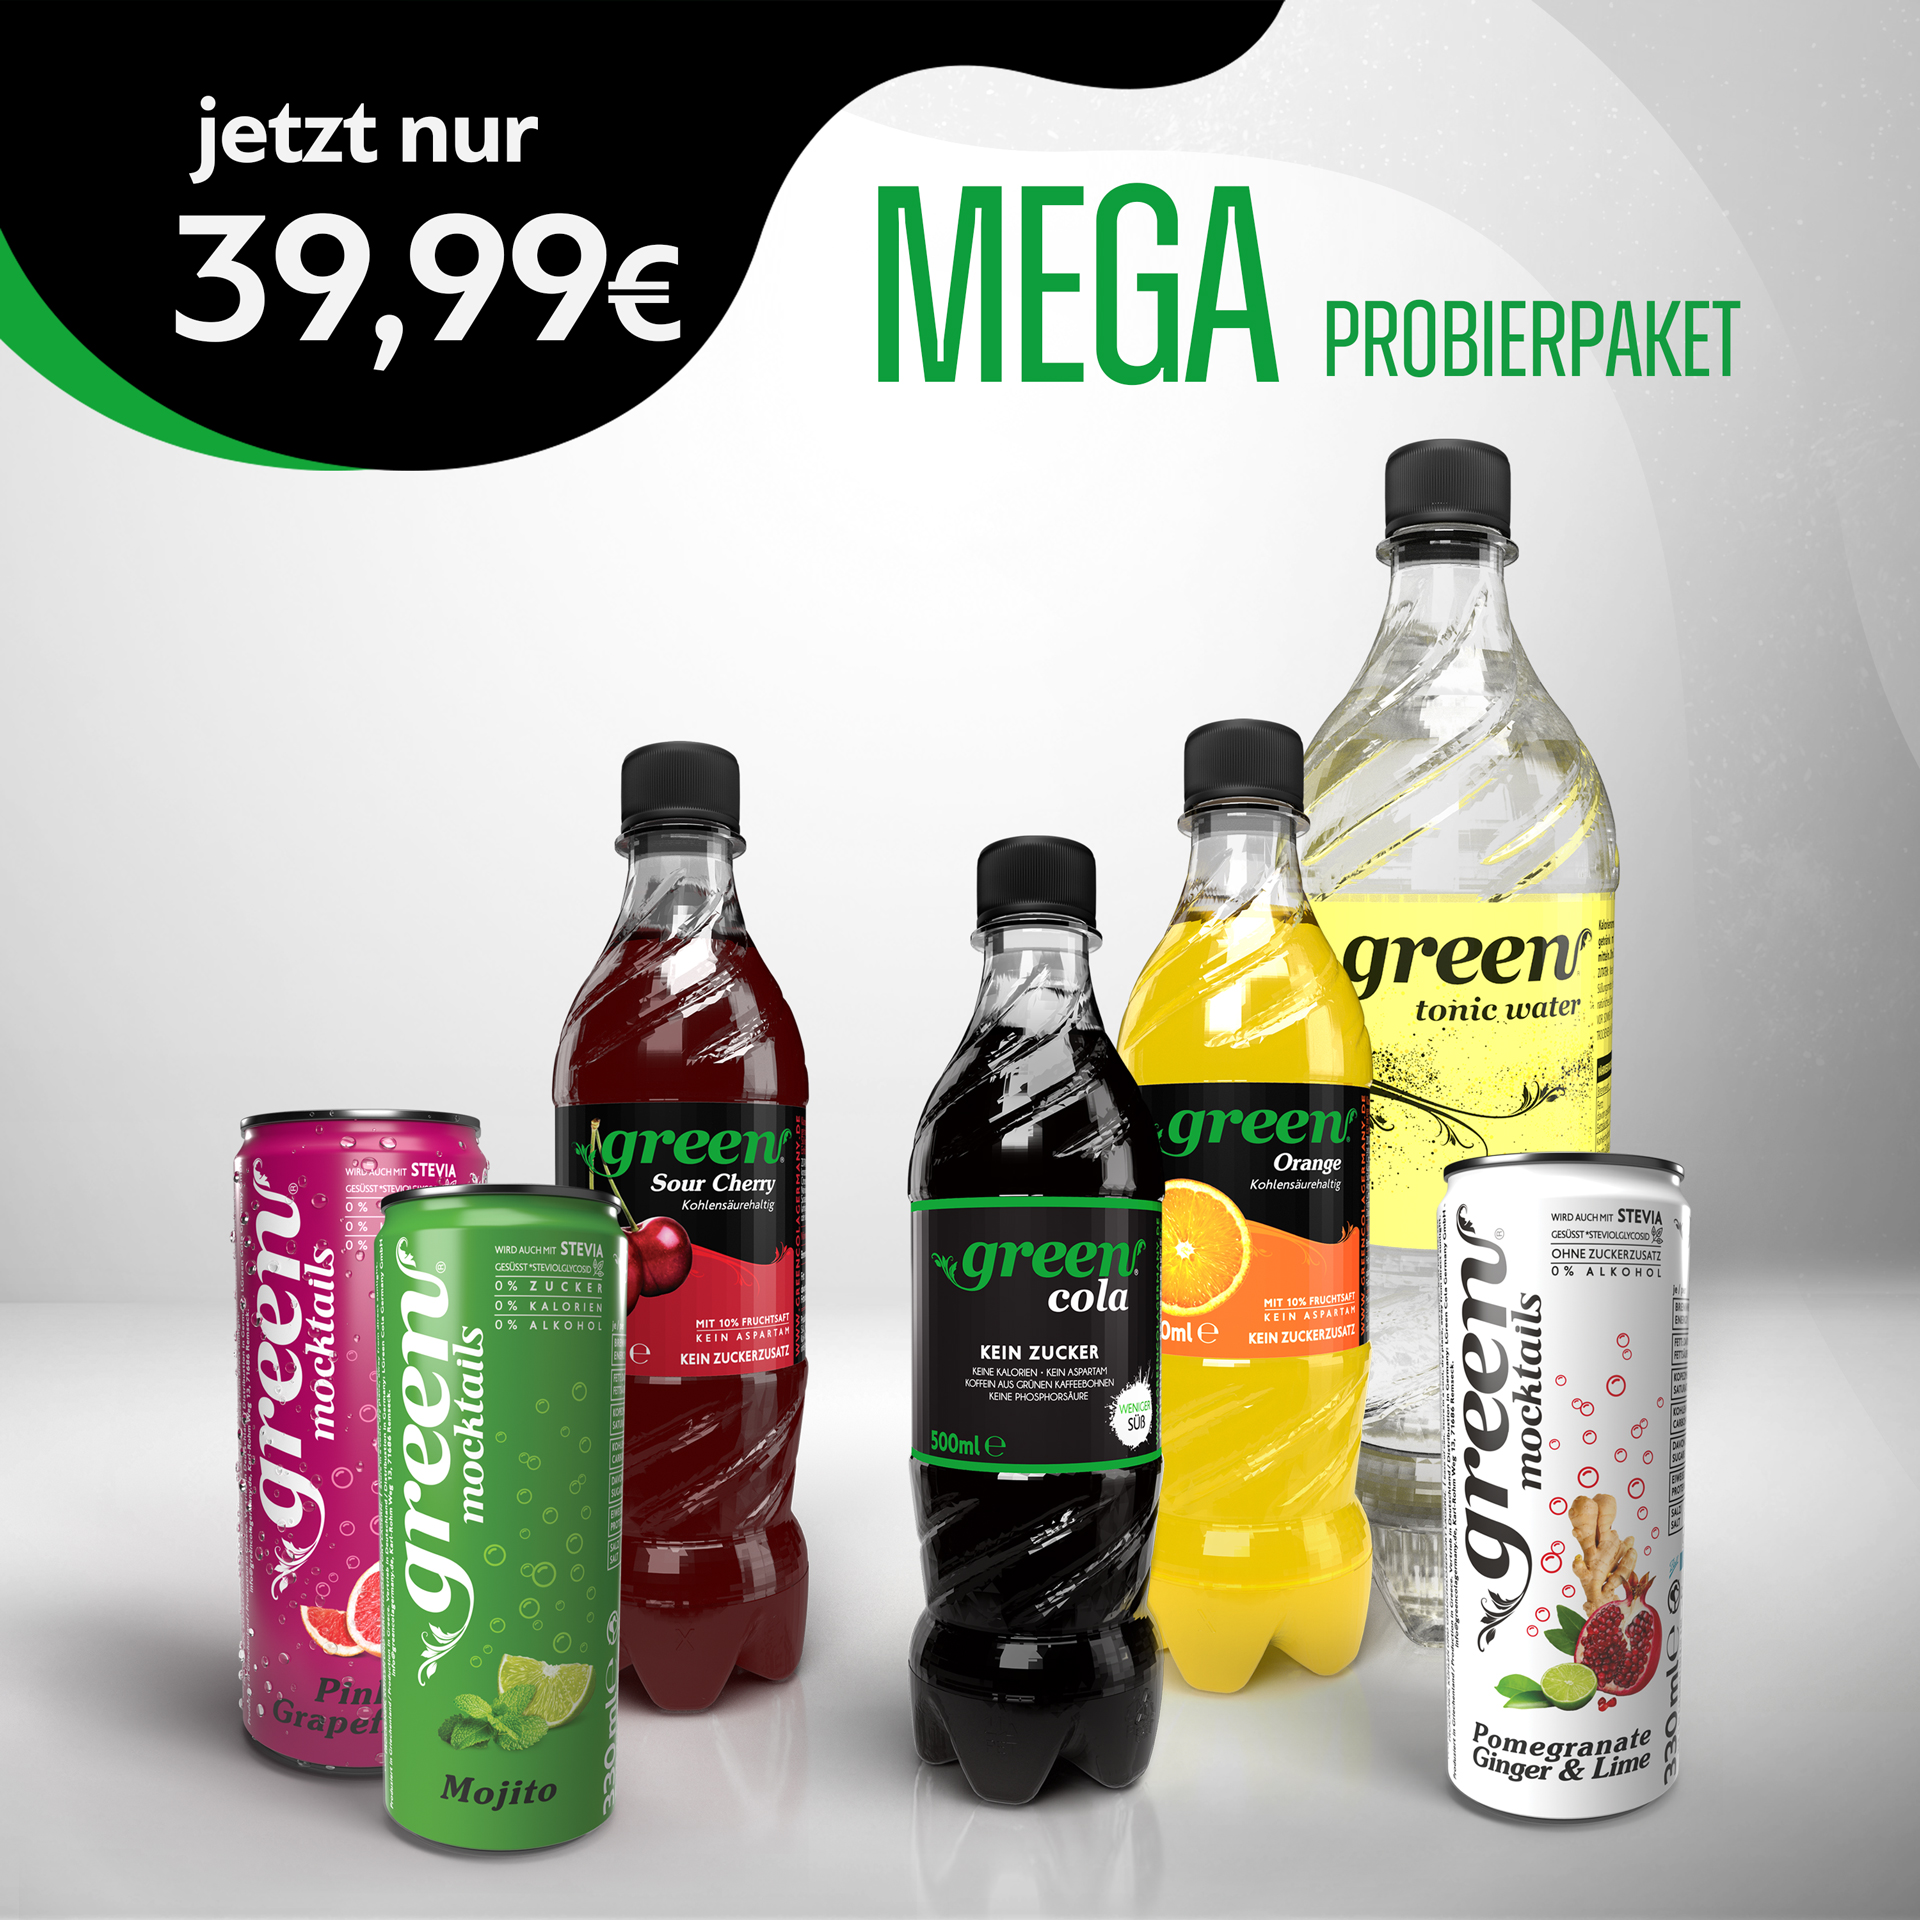 Green MEGA - Probierpaket